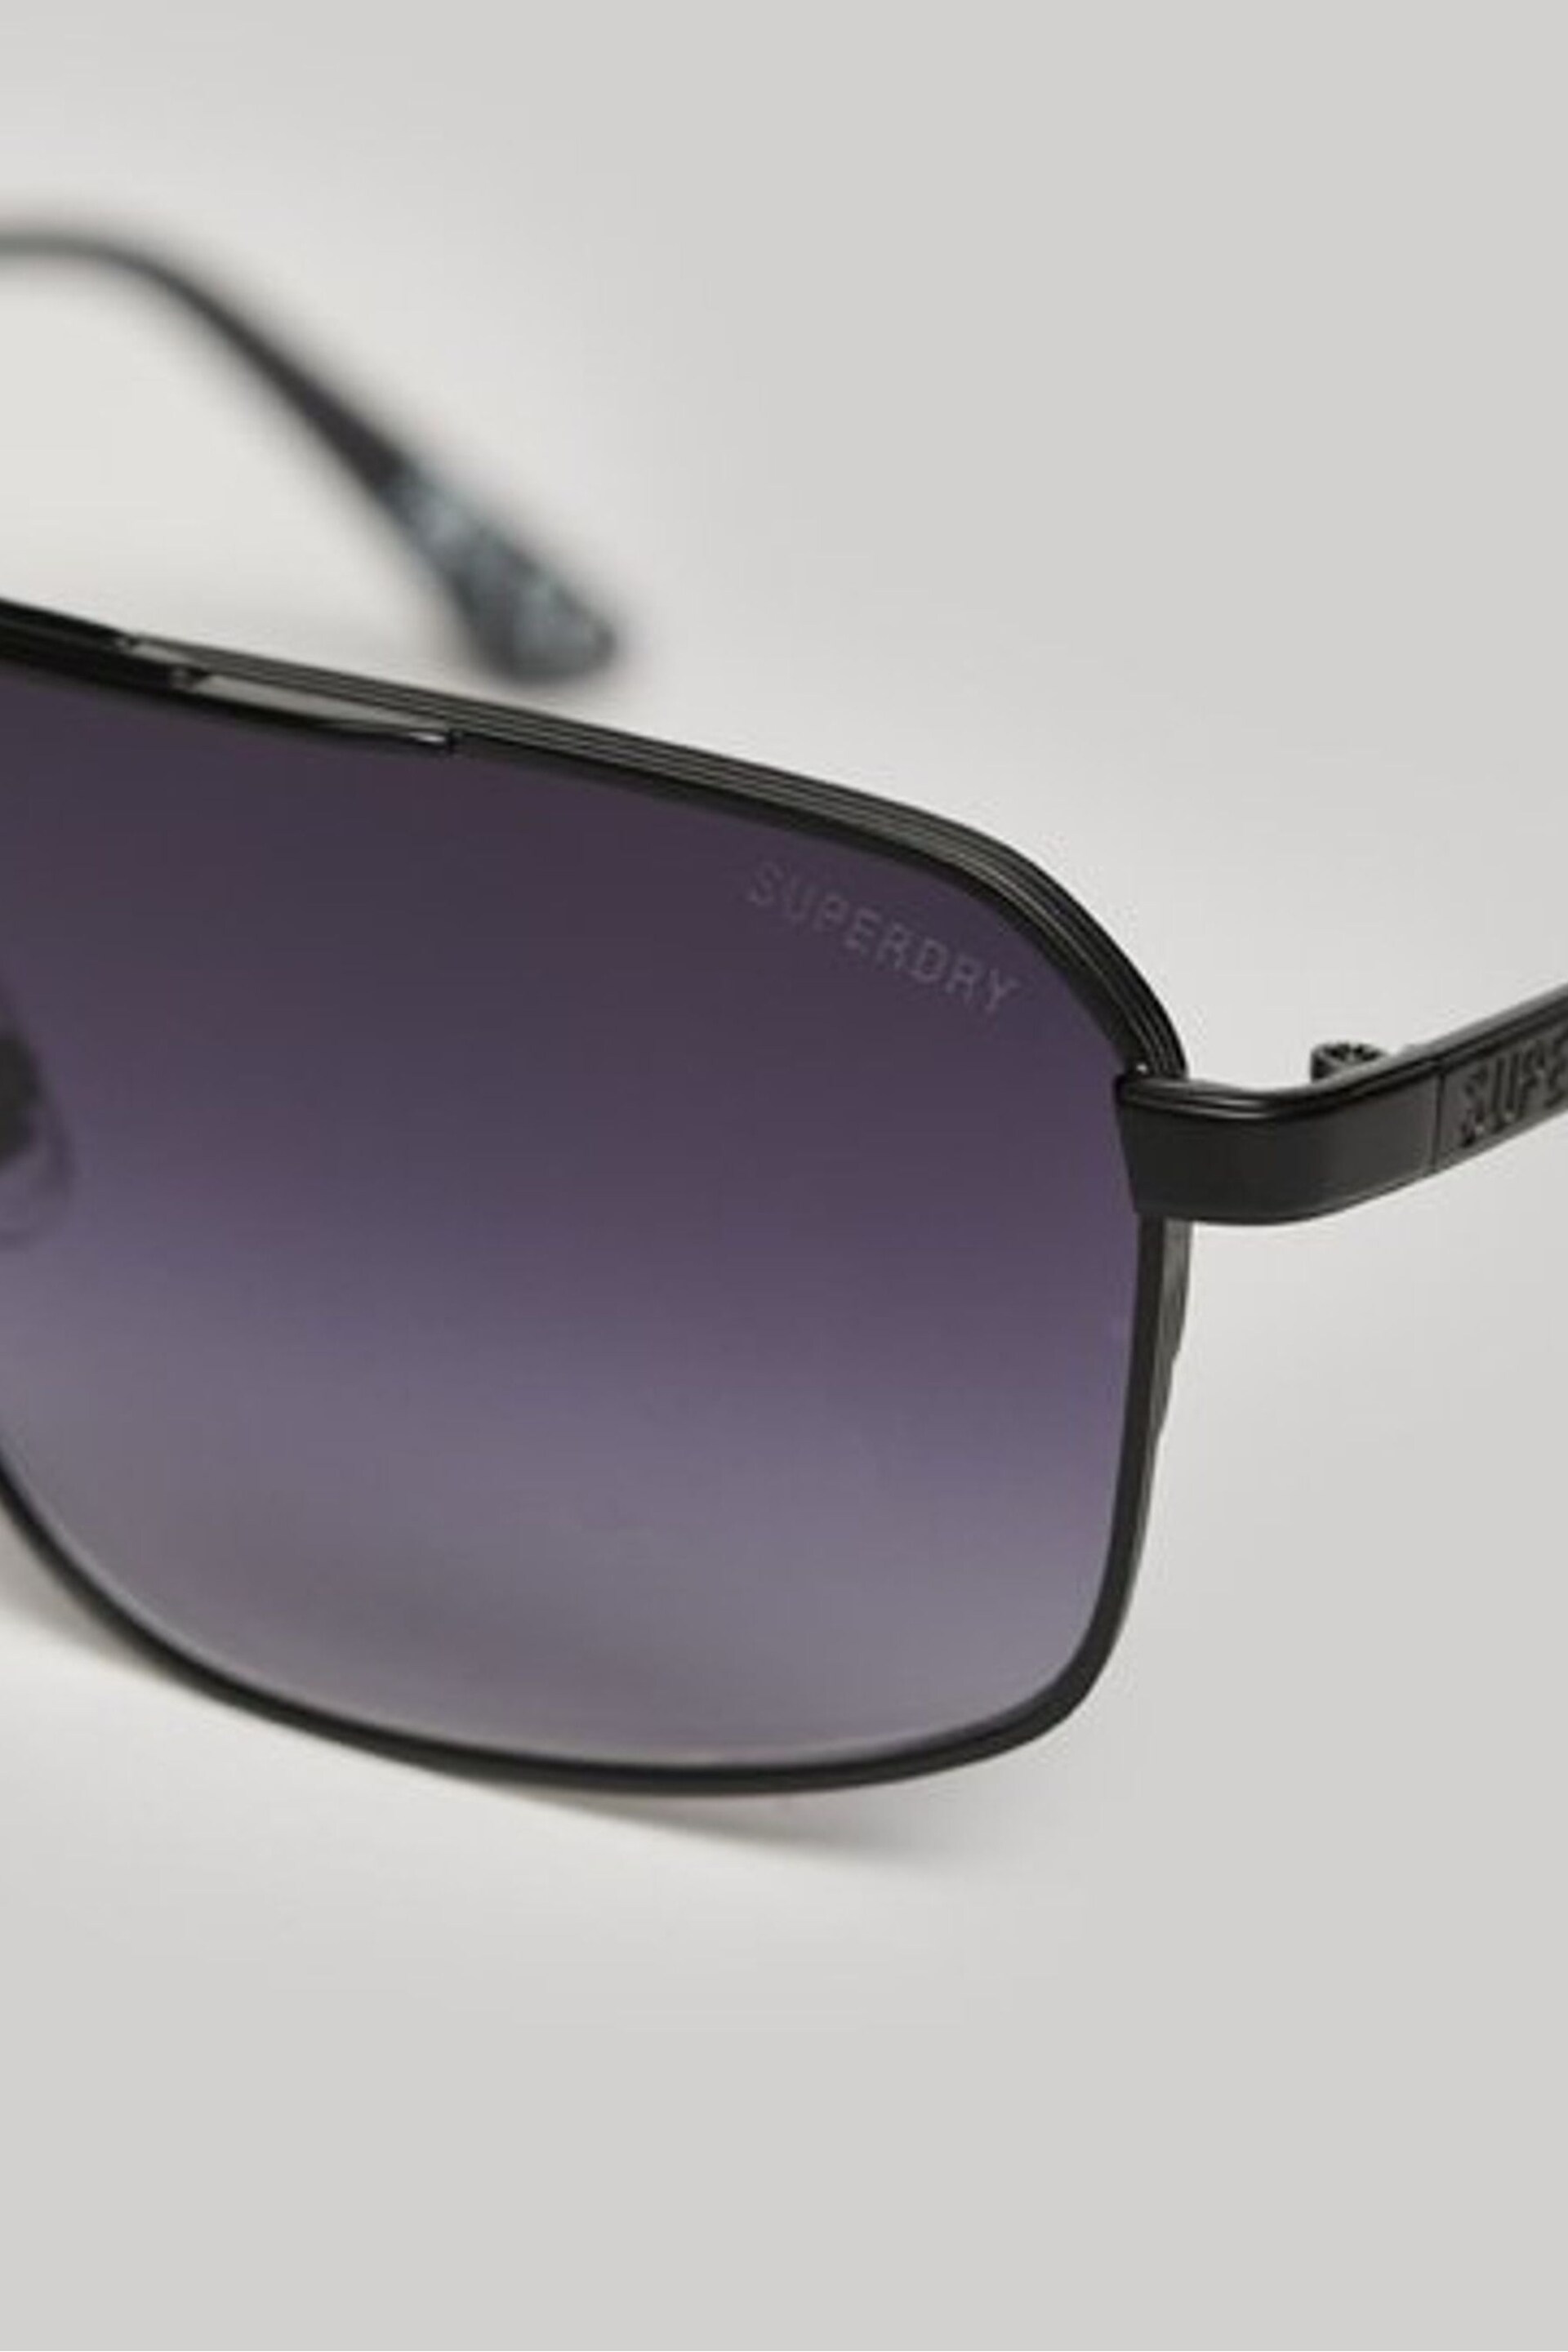 Superdry Black SDR Coleman Sunglasses - Image 4 of 5